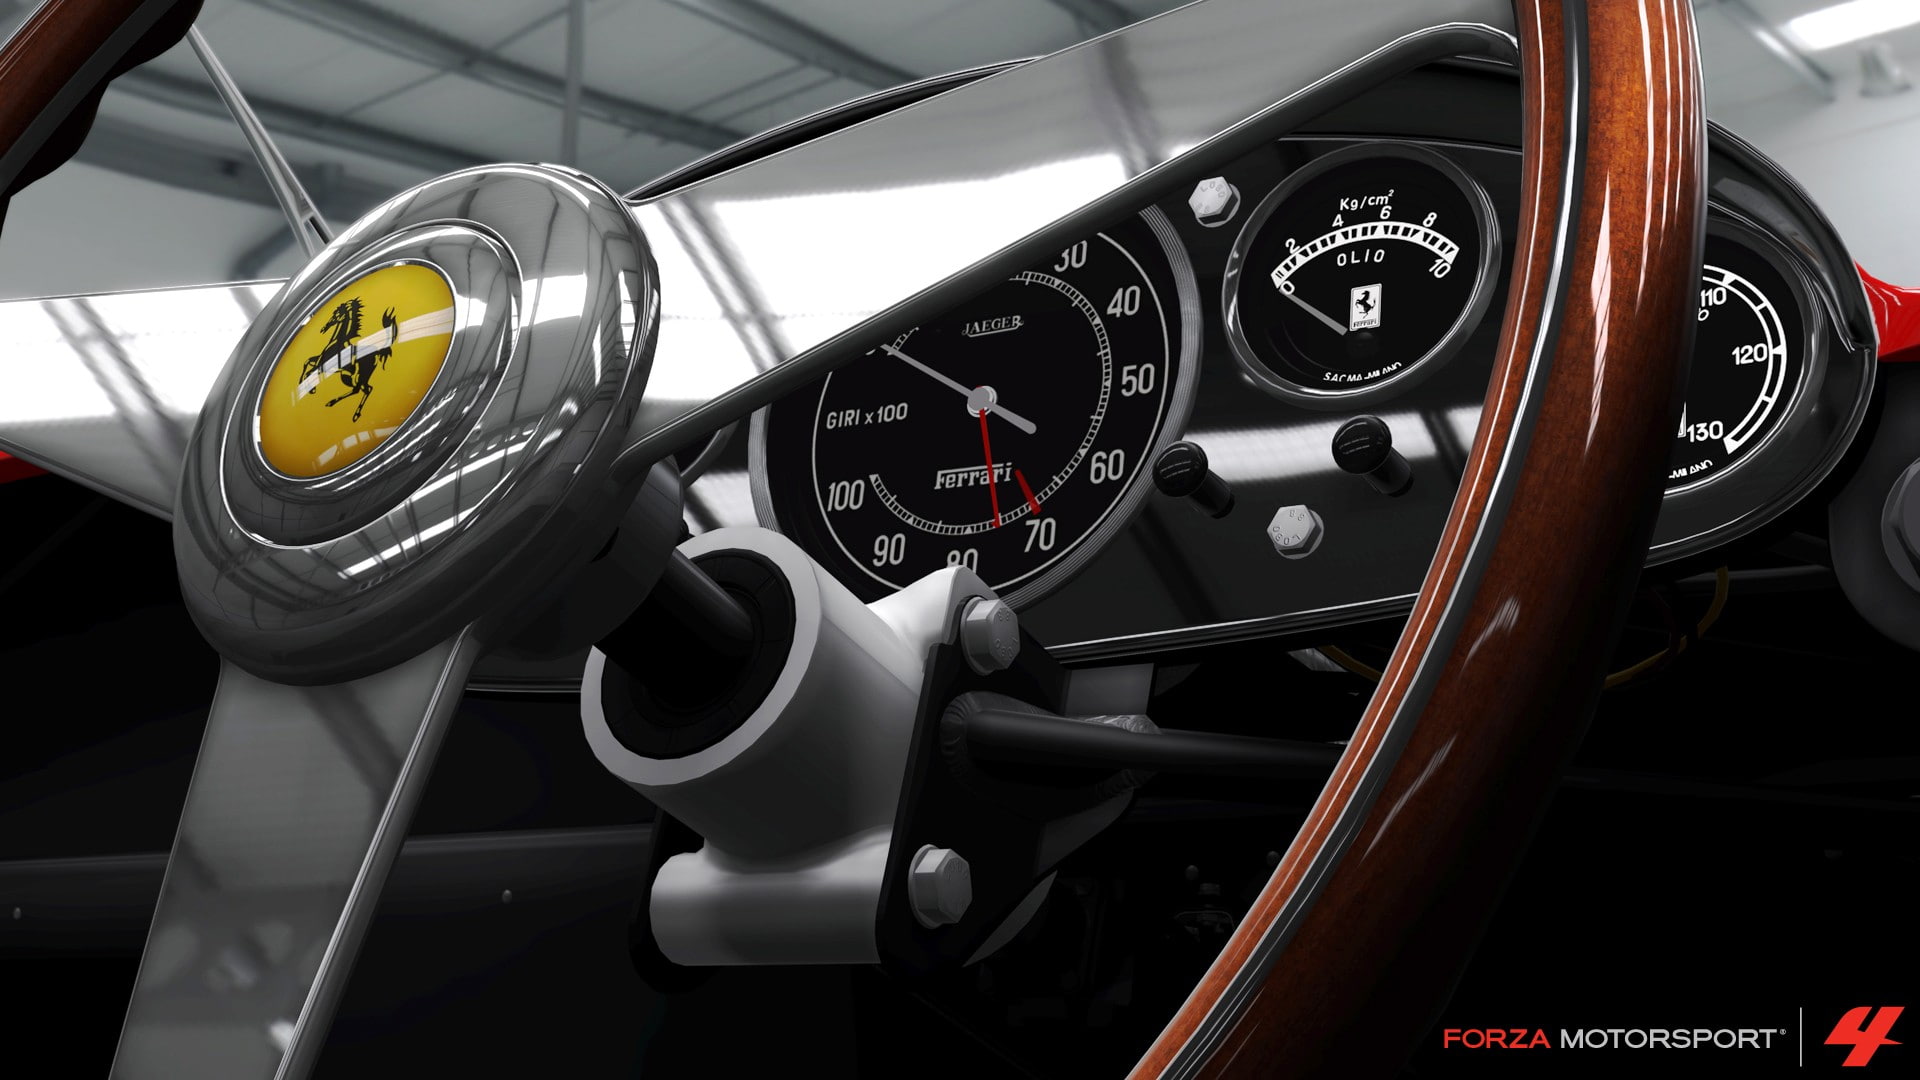 Forza Motorsport 4, car, video games, mode of transportation